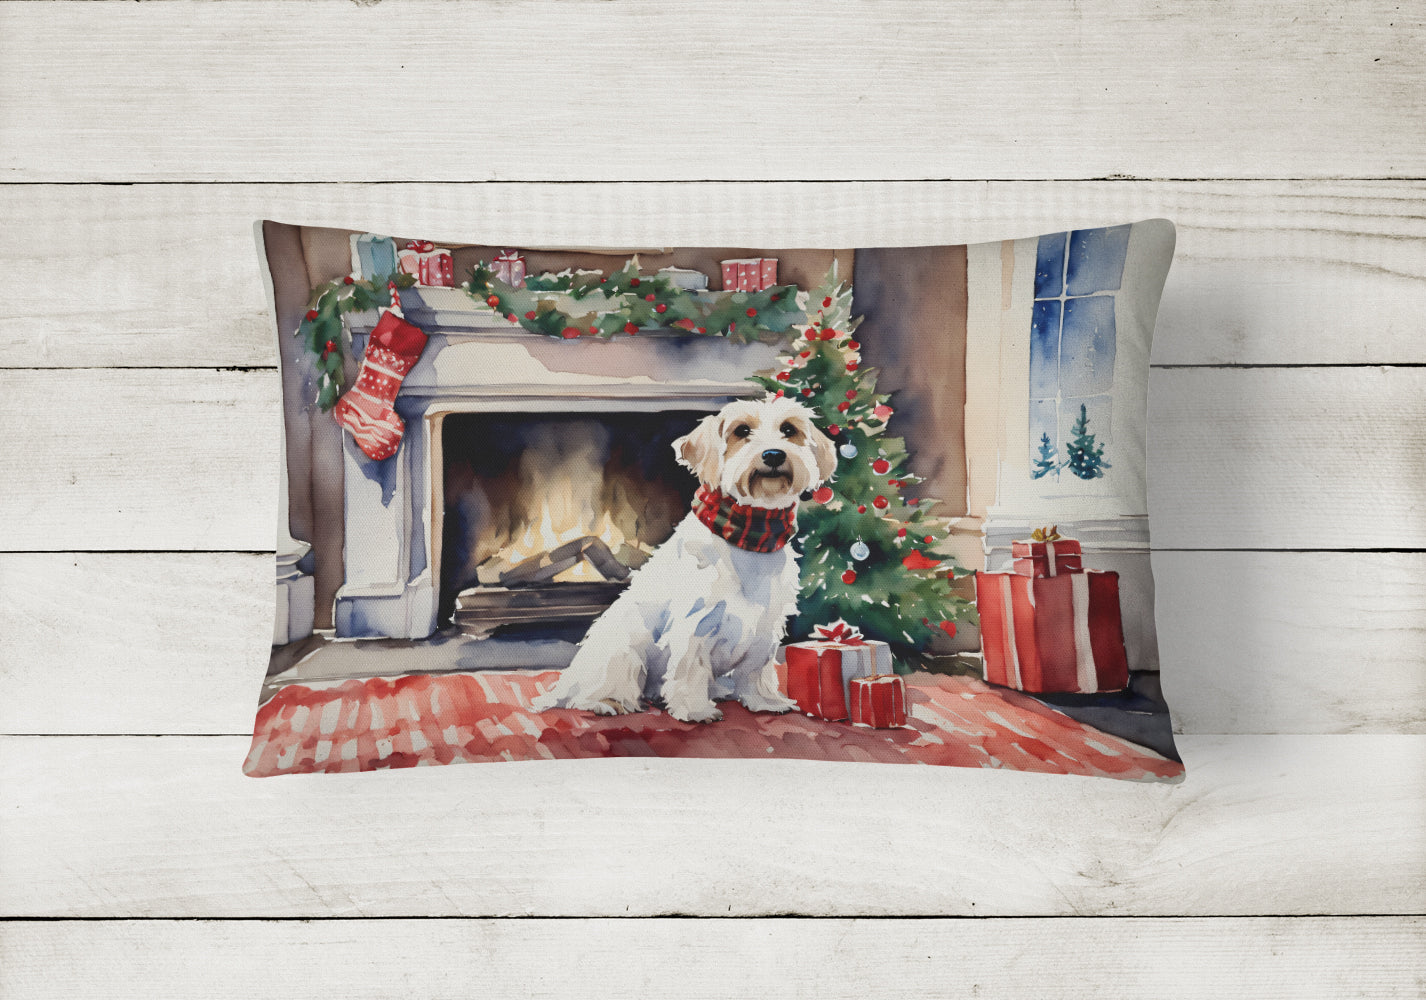 Buy this Sealyham Terrier Cozy Christmas Throw Pillow